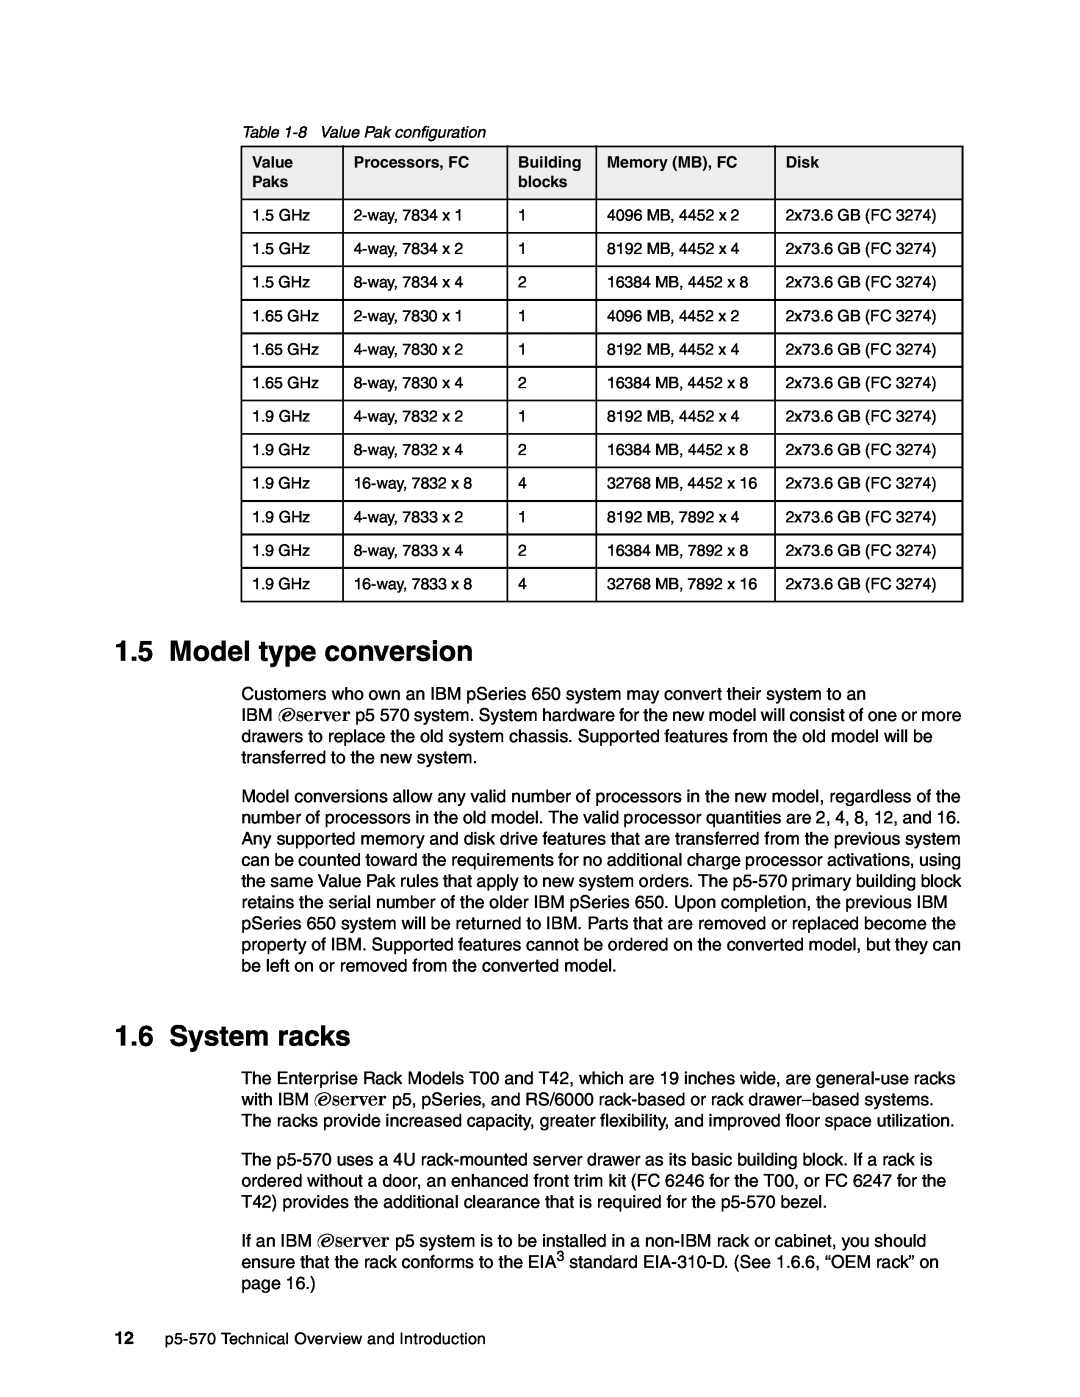 IBM P5 570 manual Model type conversion, System racks, Value, Processors, FC, Building, Memory MB, FC, Disk, Paks, blocks 